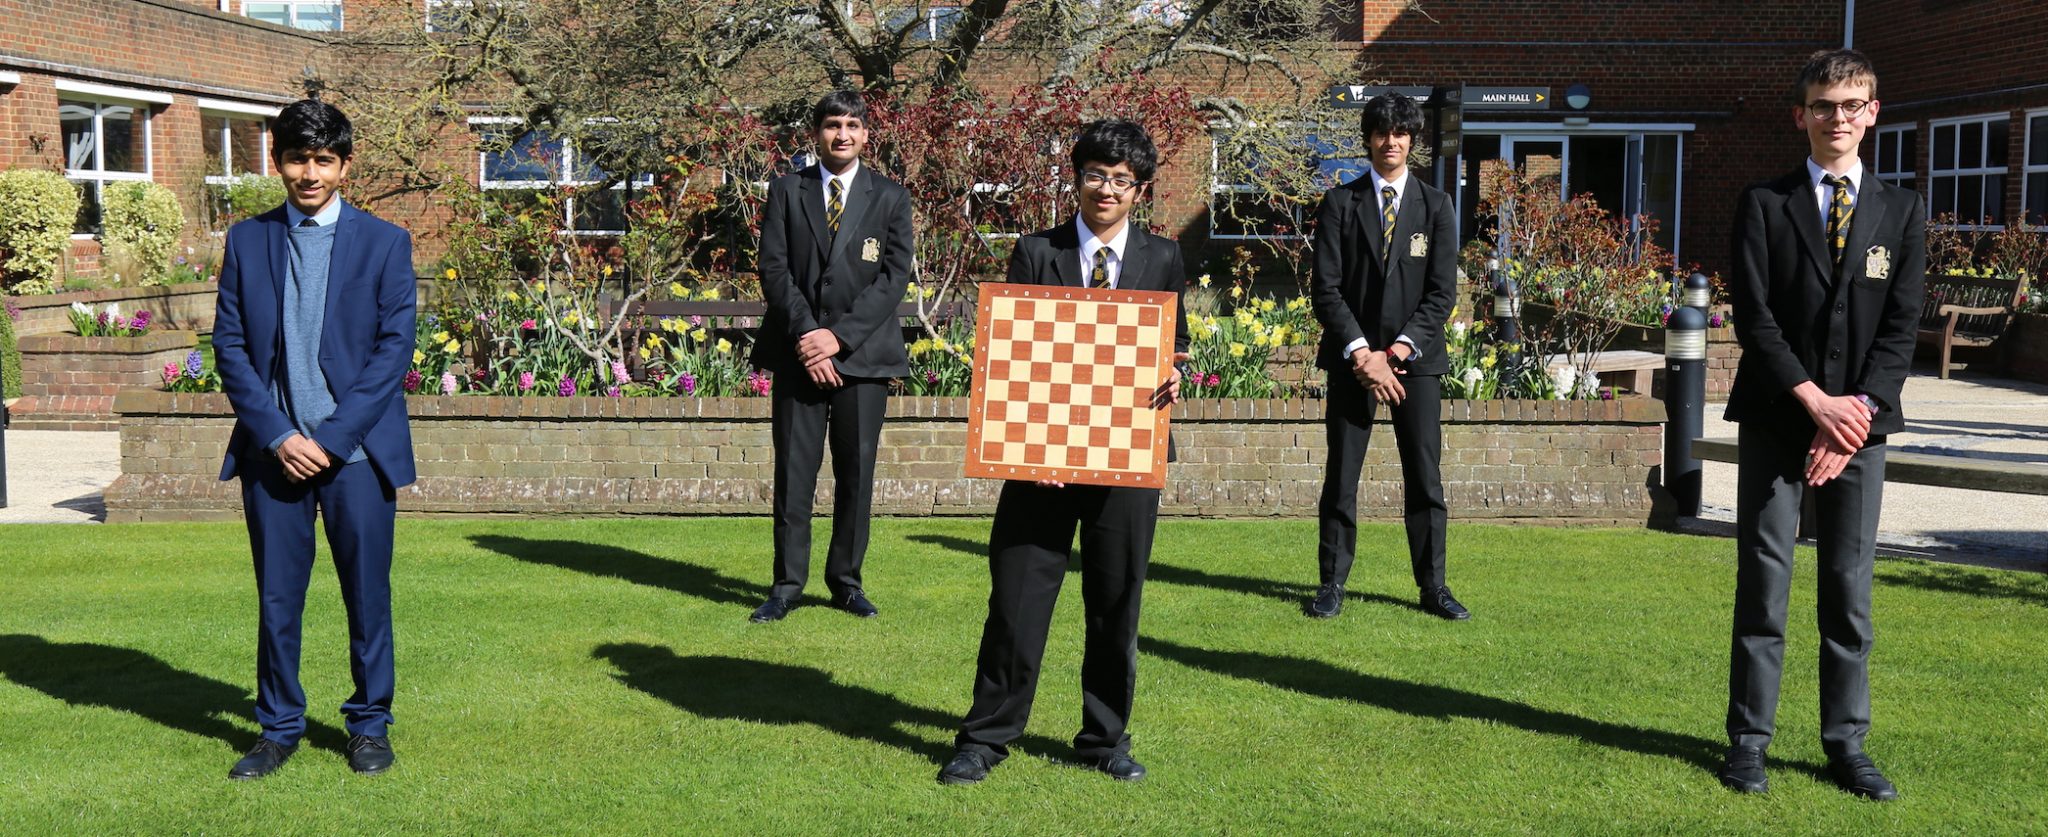 International Chess Master - Hampton School